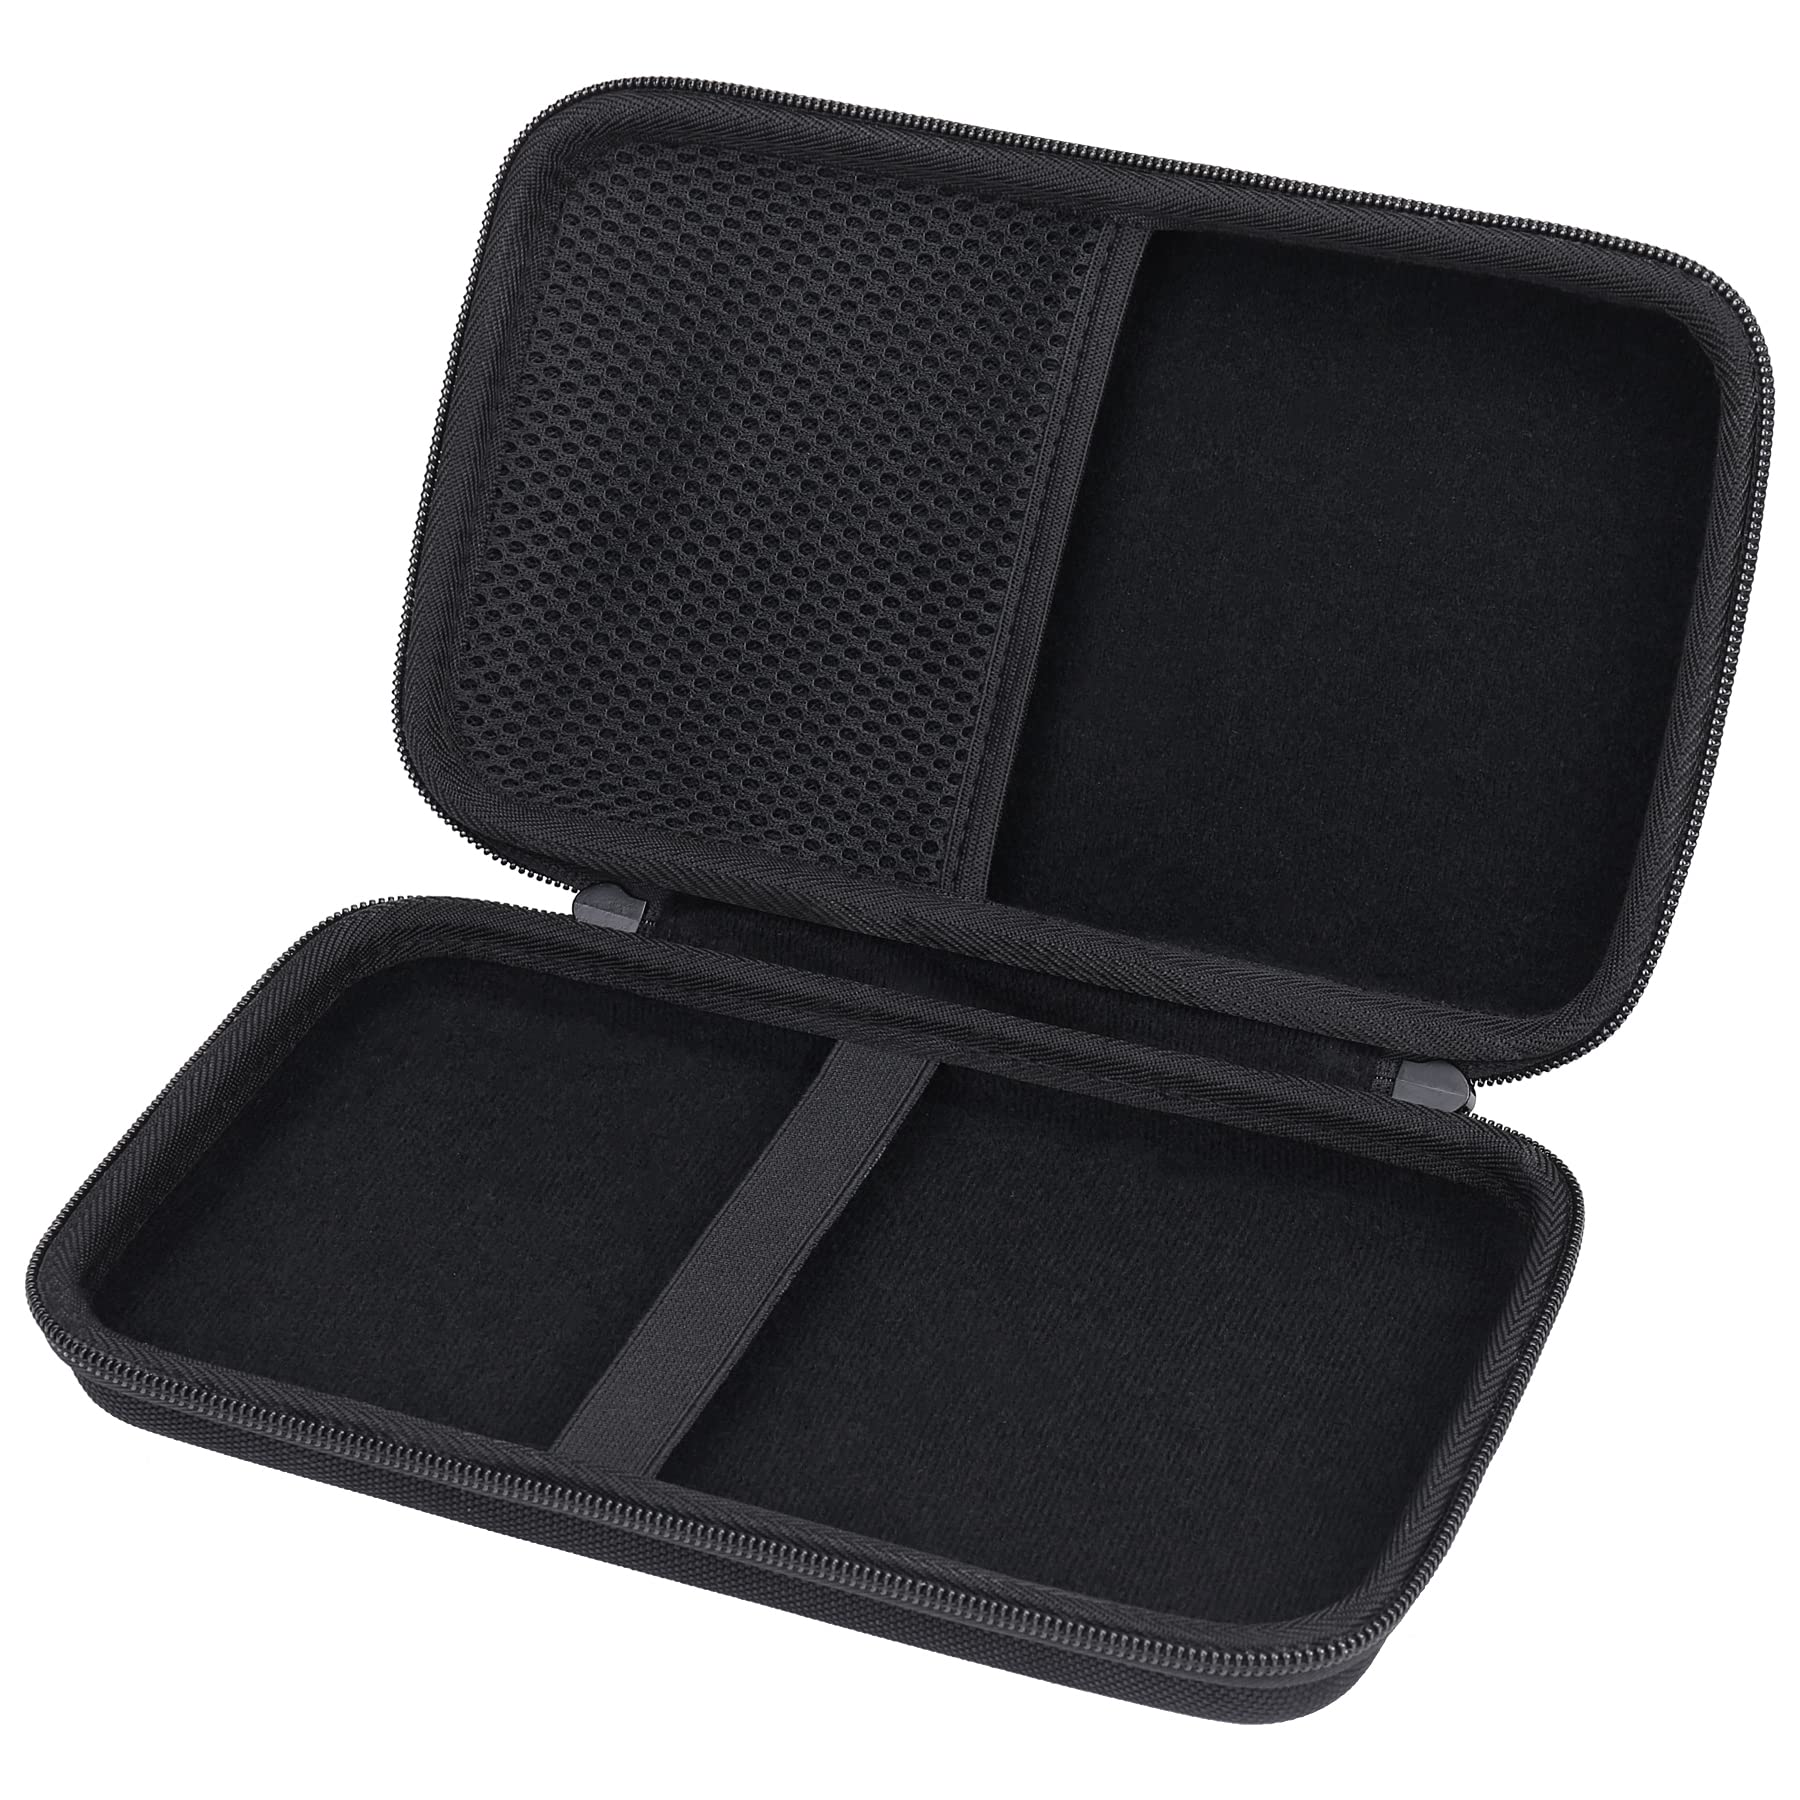 Aenllosi Hard Carrying Case Compatible with Garmin dezl OTR800/dezl OTR810/DriveSmart 86/RV 890 8-inch Car GPS Navigator